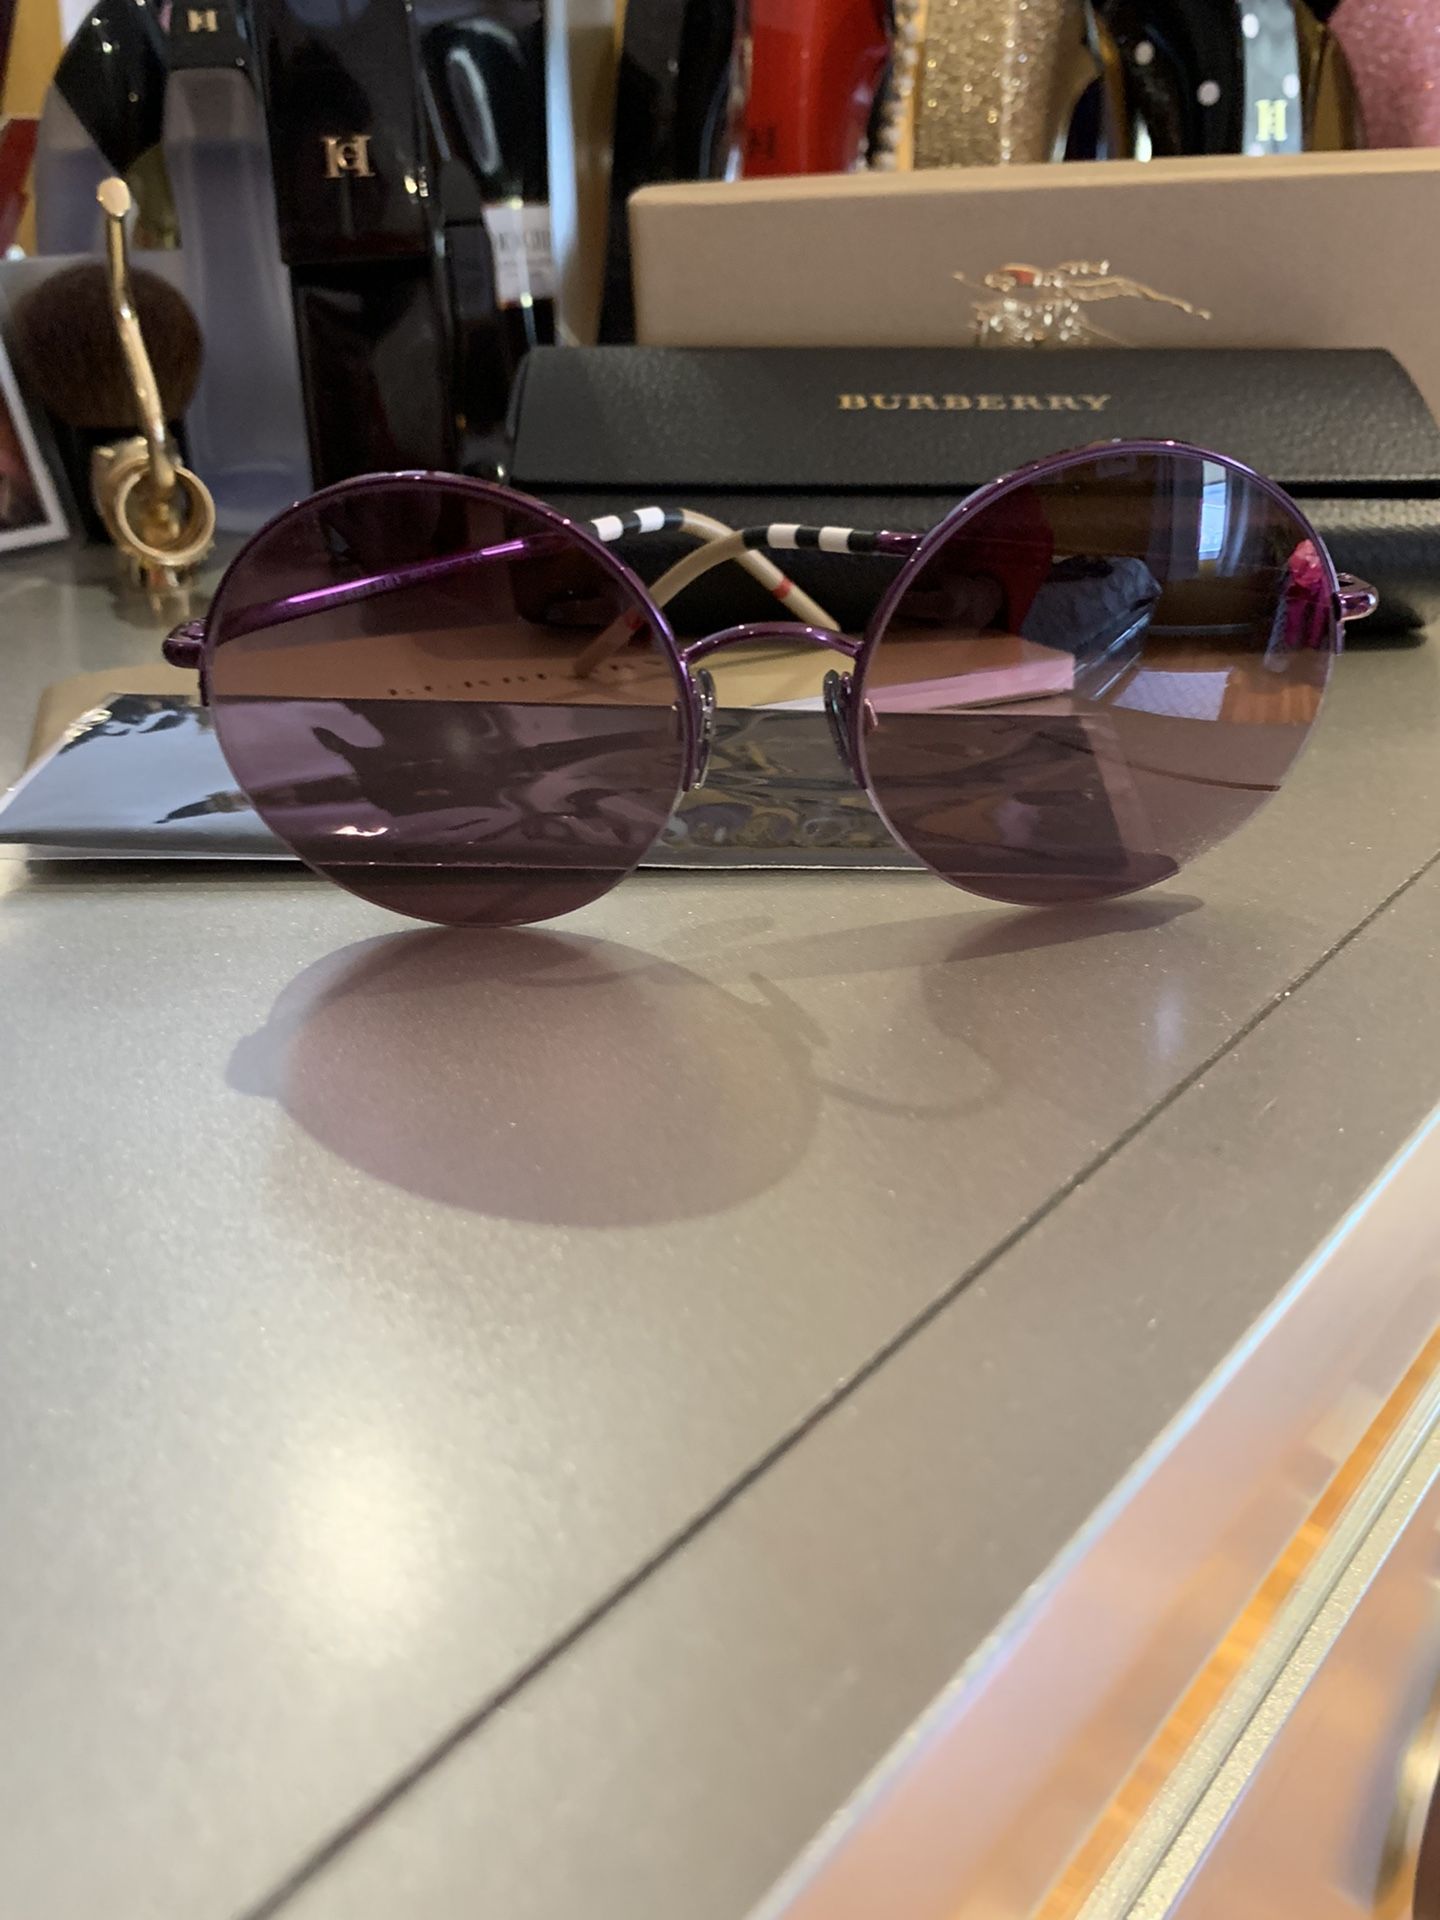 Authentic Burberry Round Sunglasses  - Brand New In Box W/Case